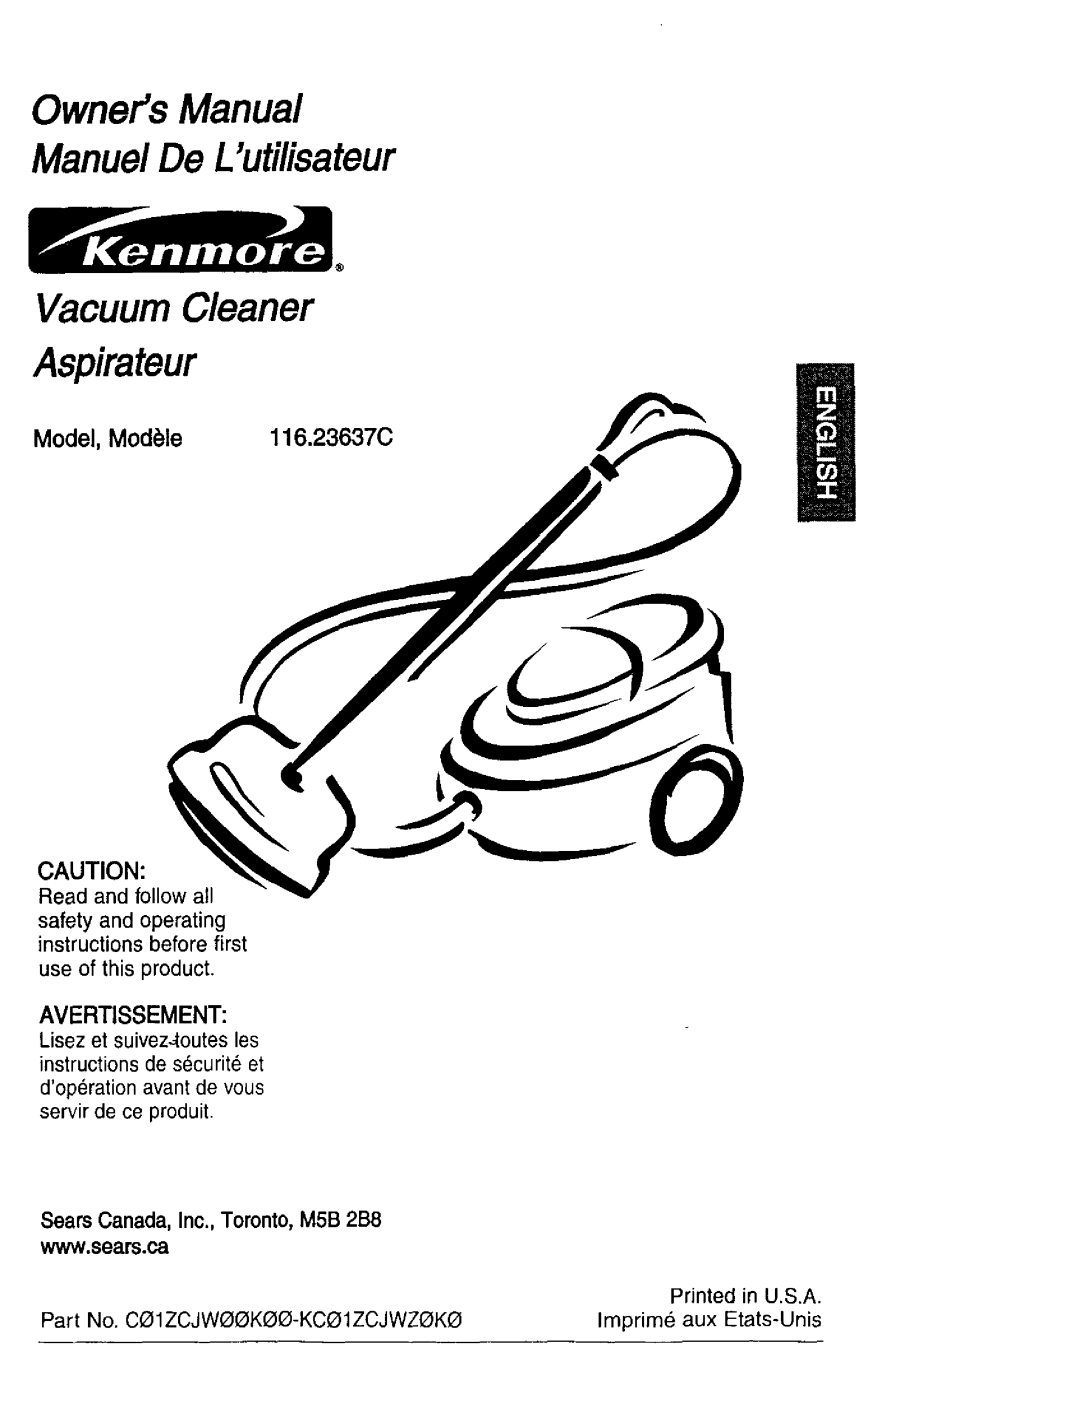 Kenmore 116.23637C owner manual Model, Mod .le, OwnersManual, Manuel De Lutilisateur, Vacuum Cleaner Aspirateur 